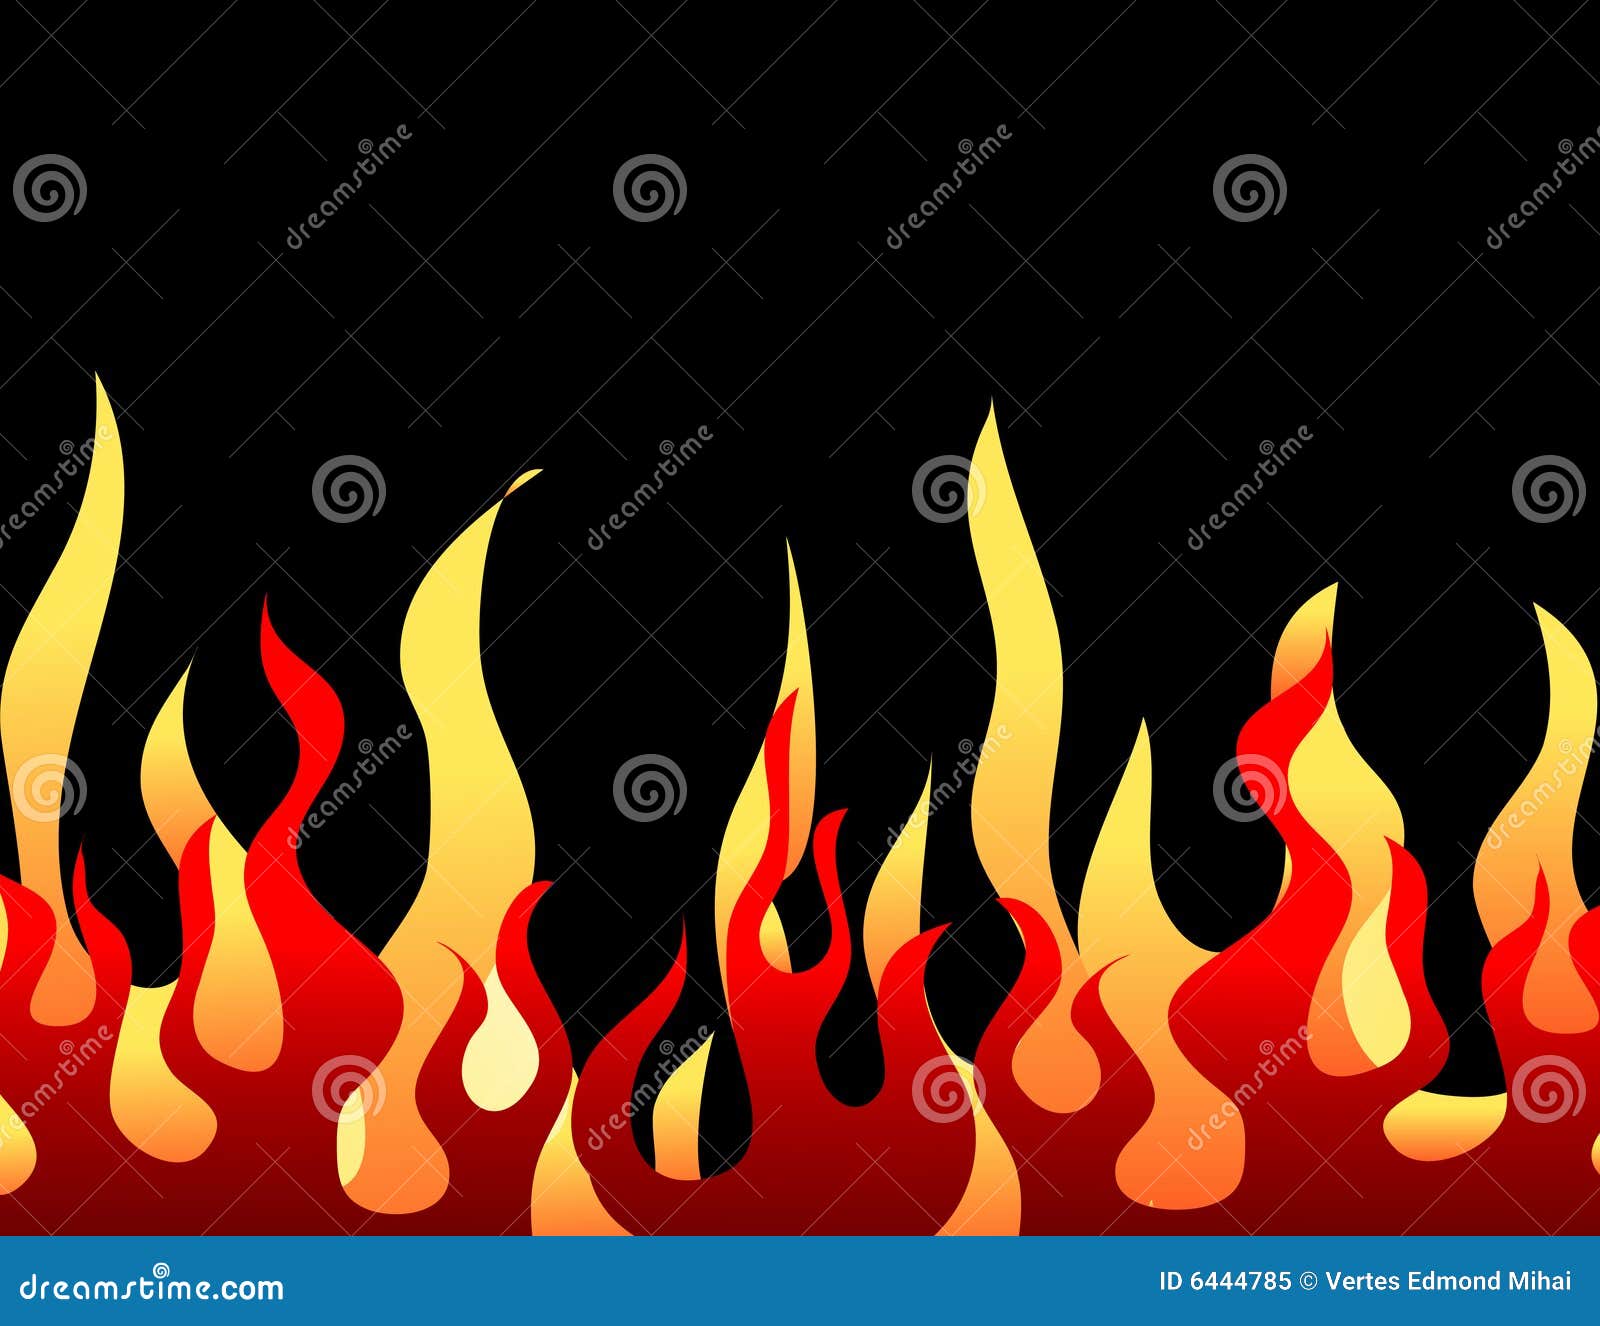 Flames Splash Fire Decal Sticker Choose Pattern Size #1330 